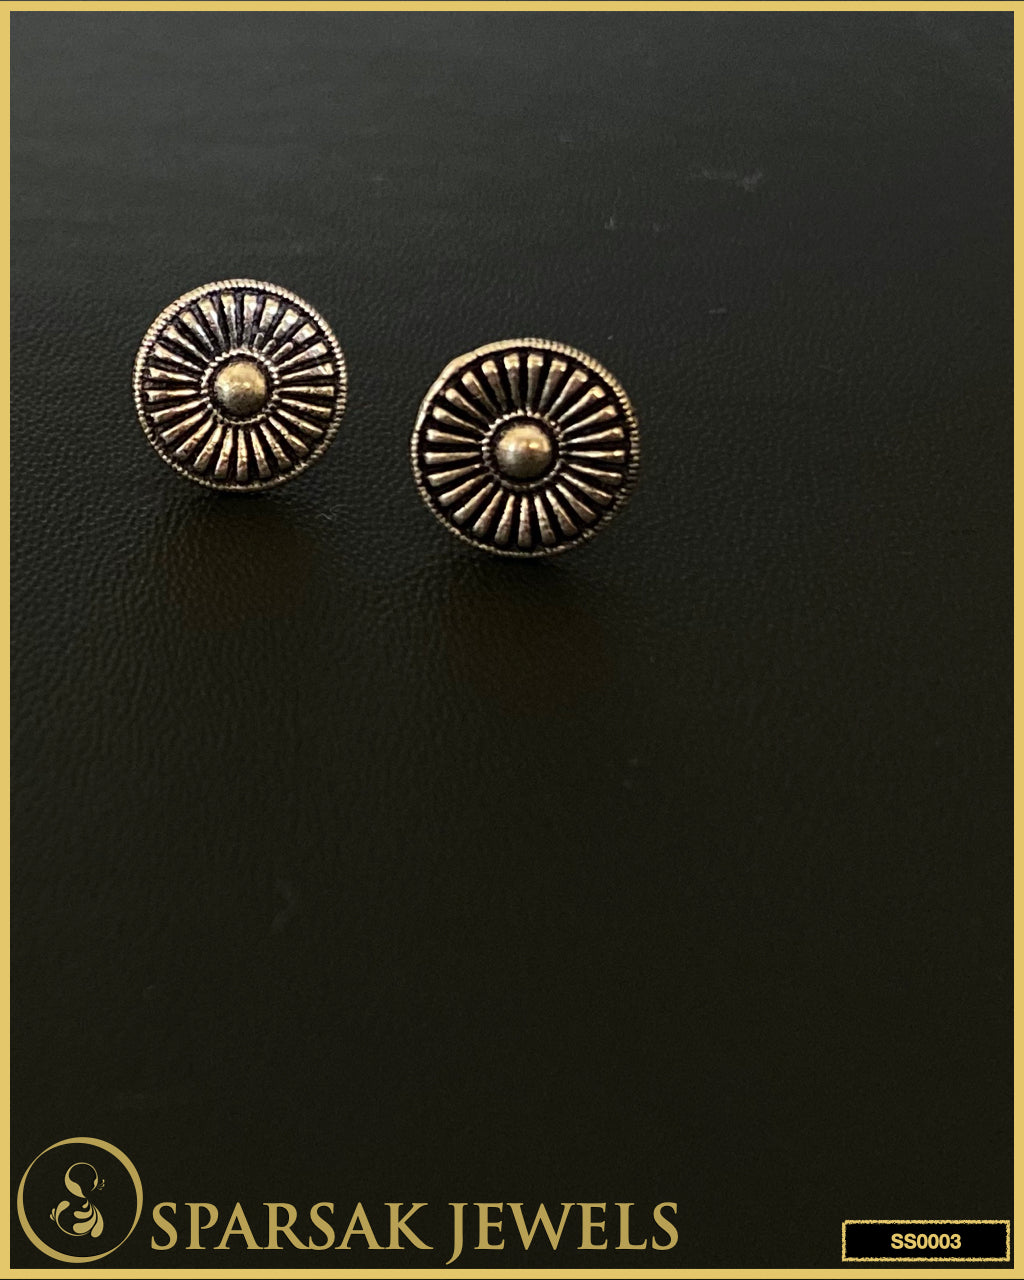 Sparsak Jewels Small Silver Stud Earrings - Delicate sophistication for elegant style